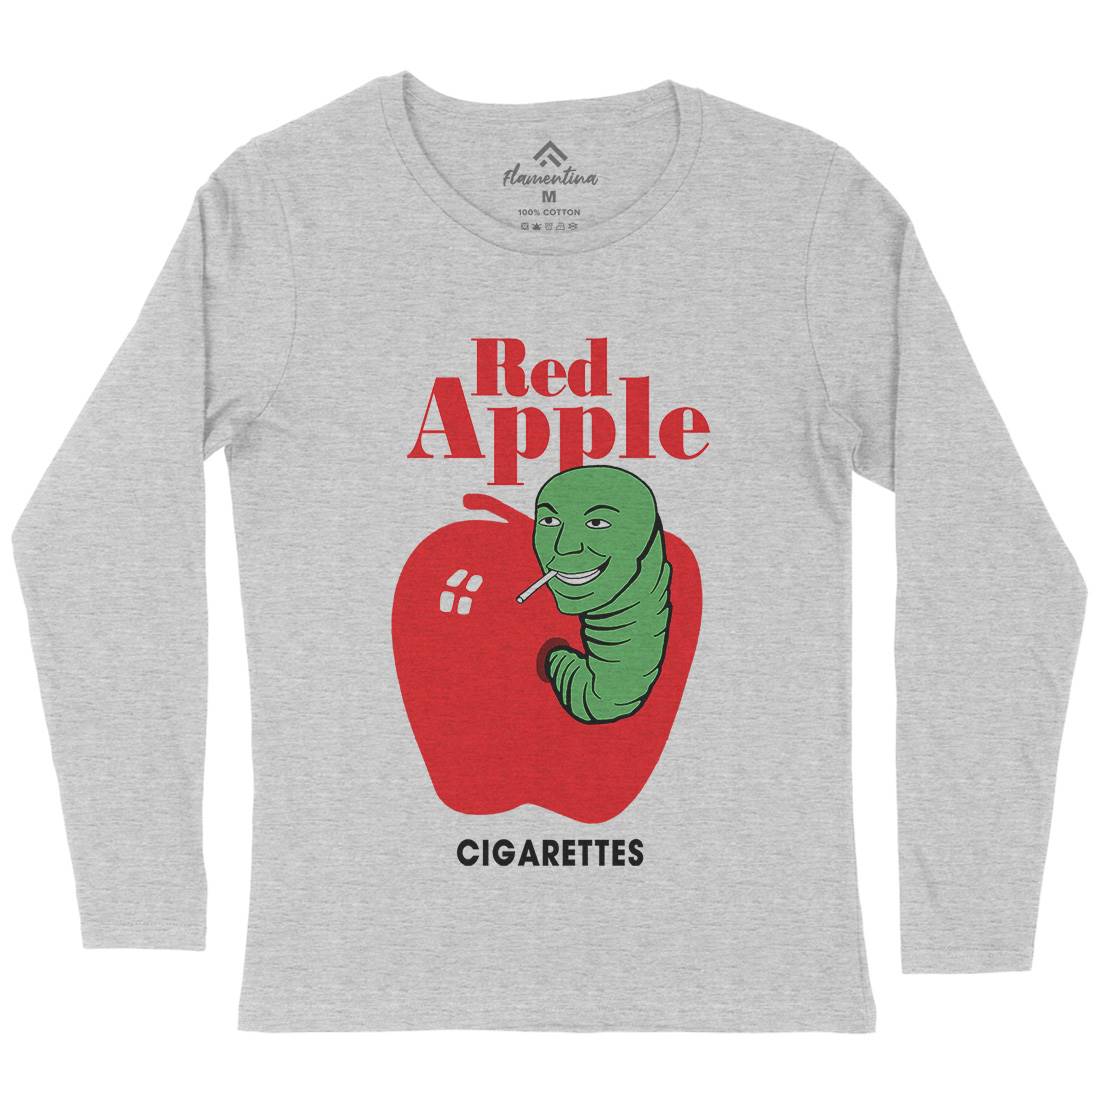 Red Apple Cigarettes Womens Long Sleeve T-Shirt Retro D211